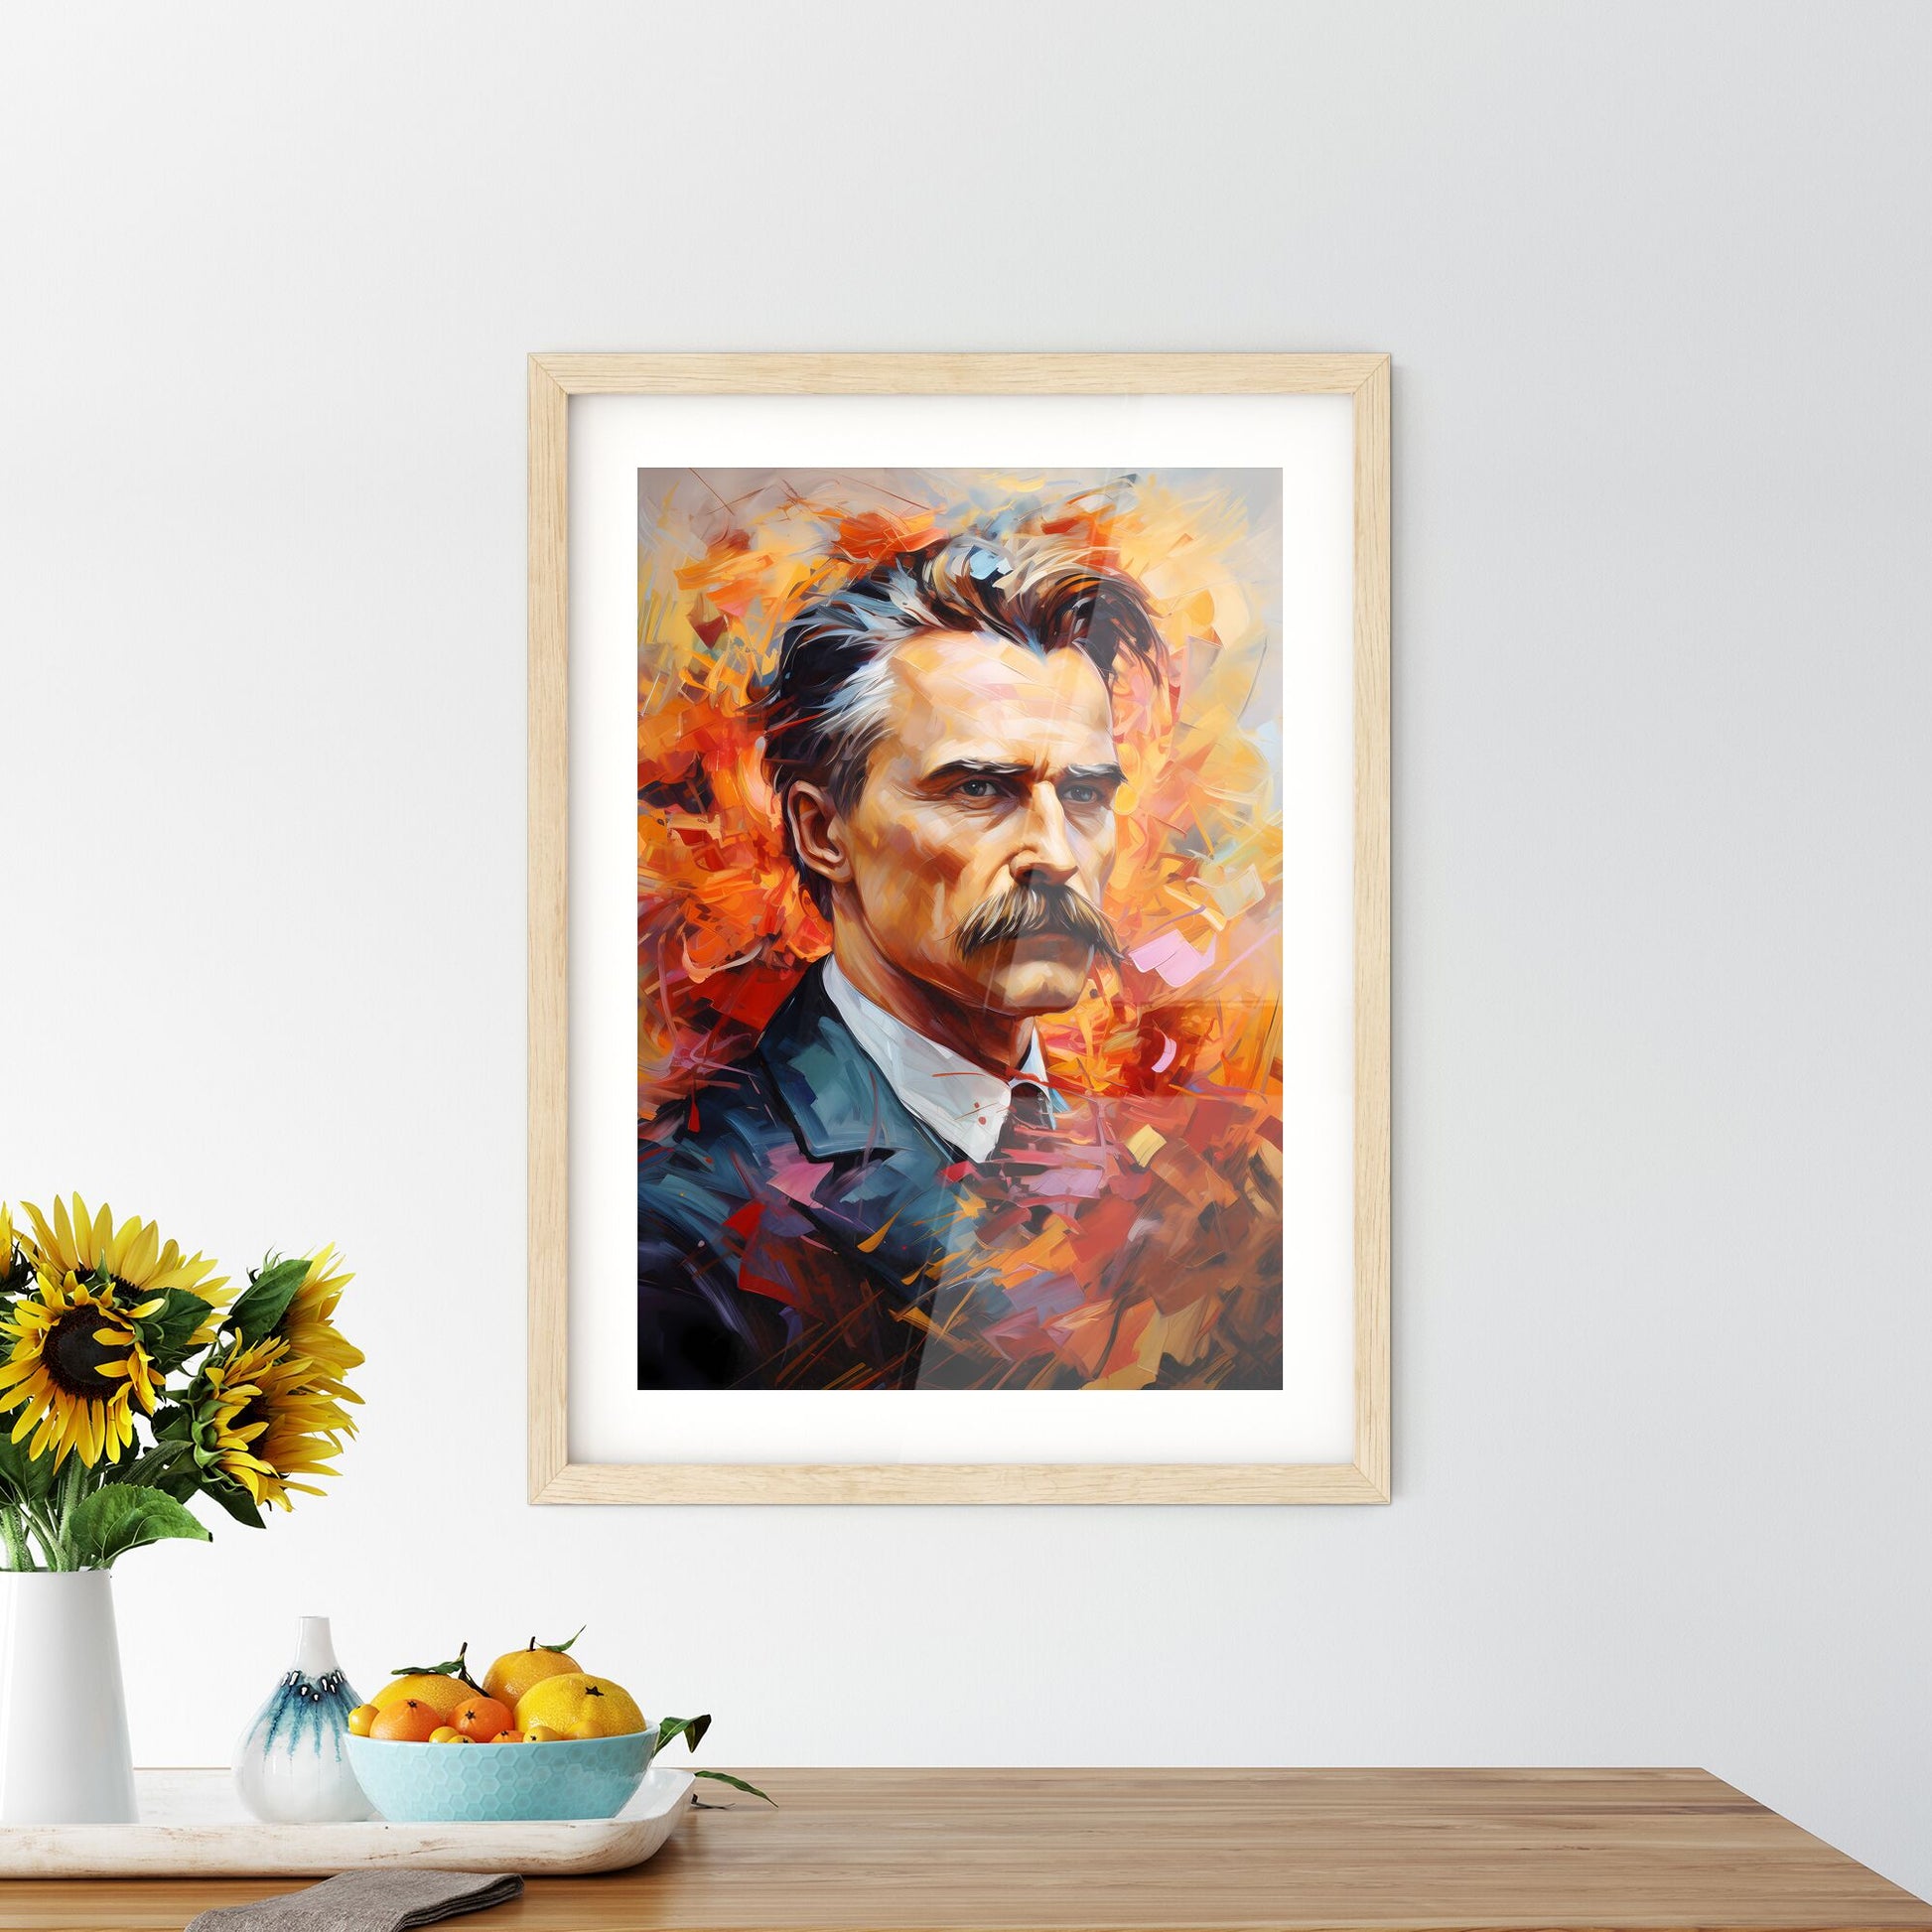 Friedrich Wilhelm Nietzsche German Philosopher - A Painting Of A Man With A Mustache Default Title